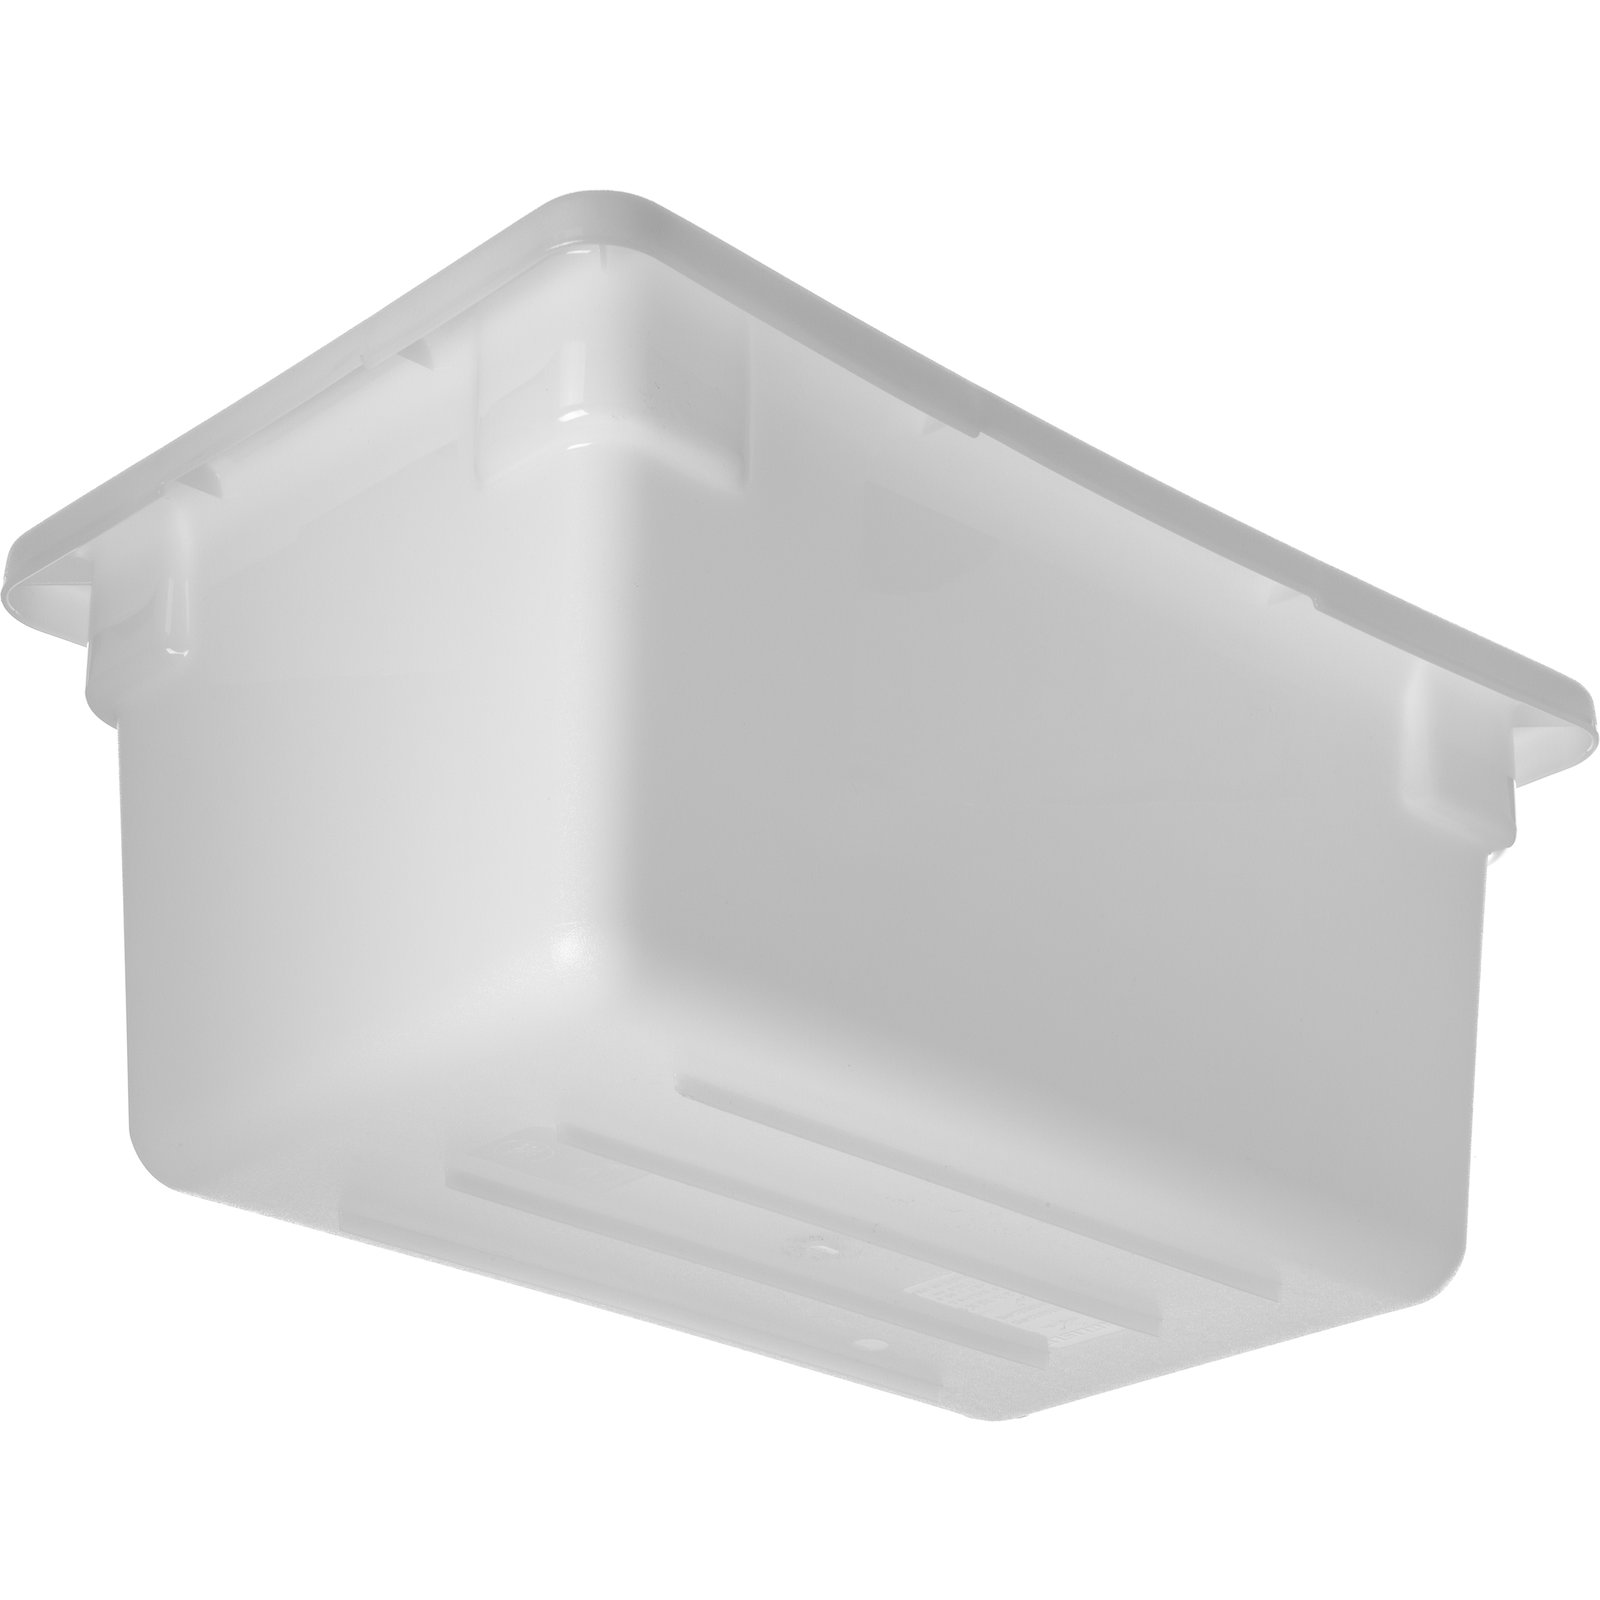 Kroger® Square Reusable Disposable Containers, 5 ct - Kroger